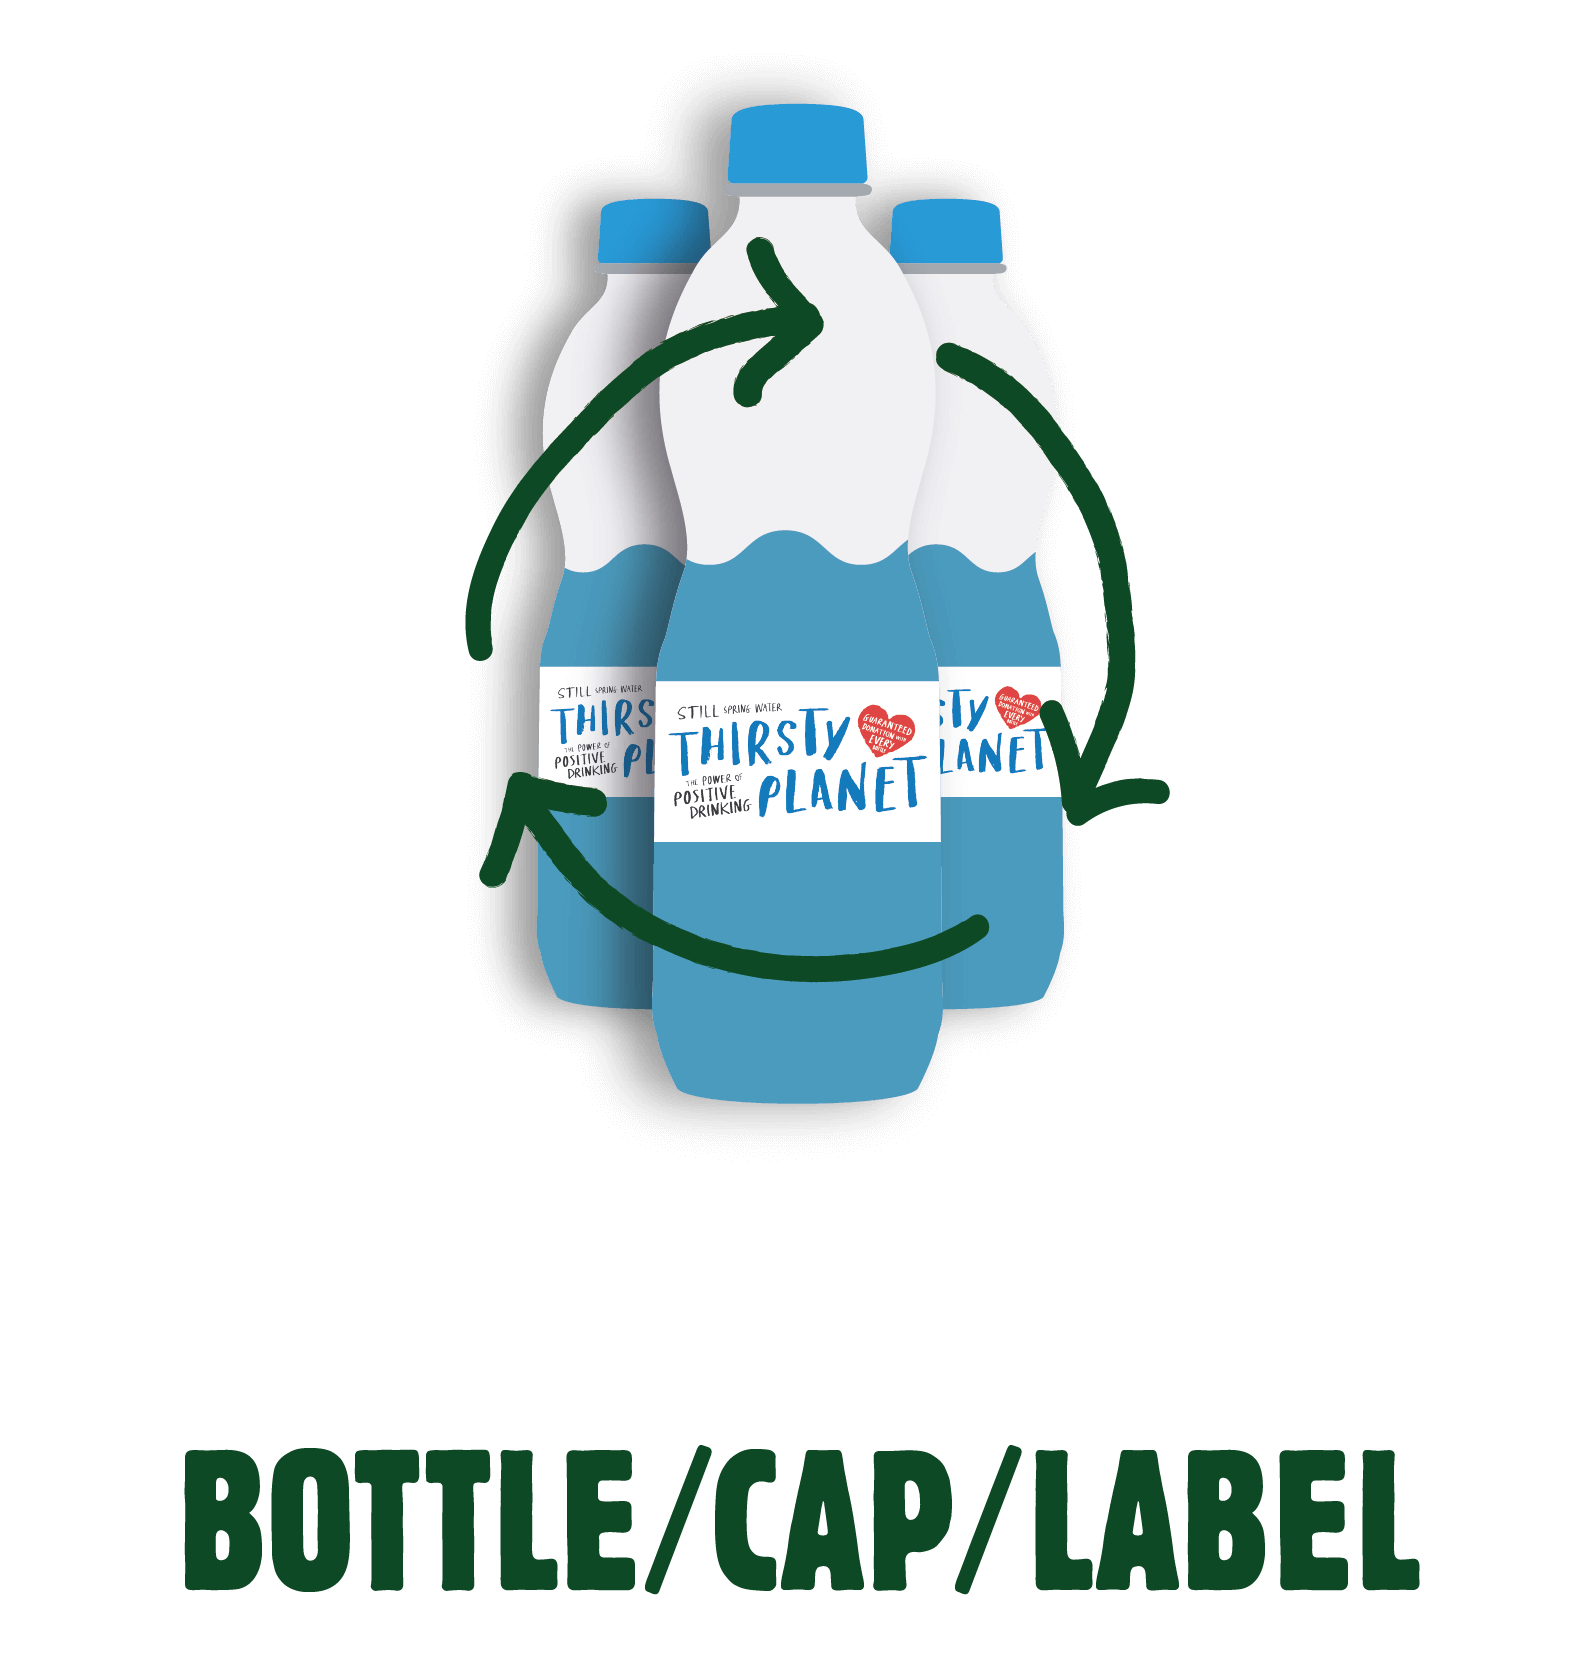 100% recyclable bottle/cap/label